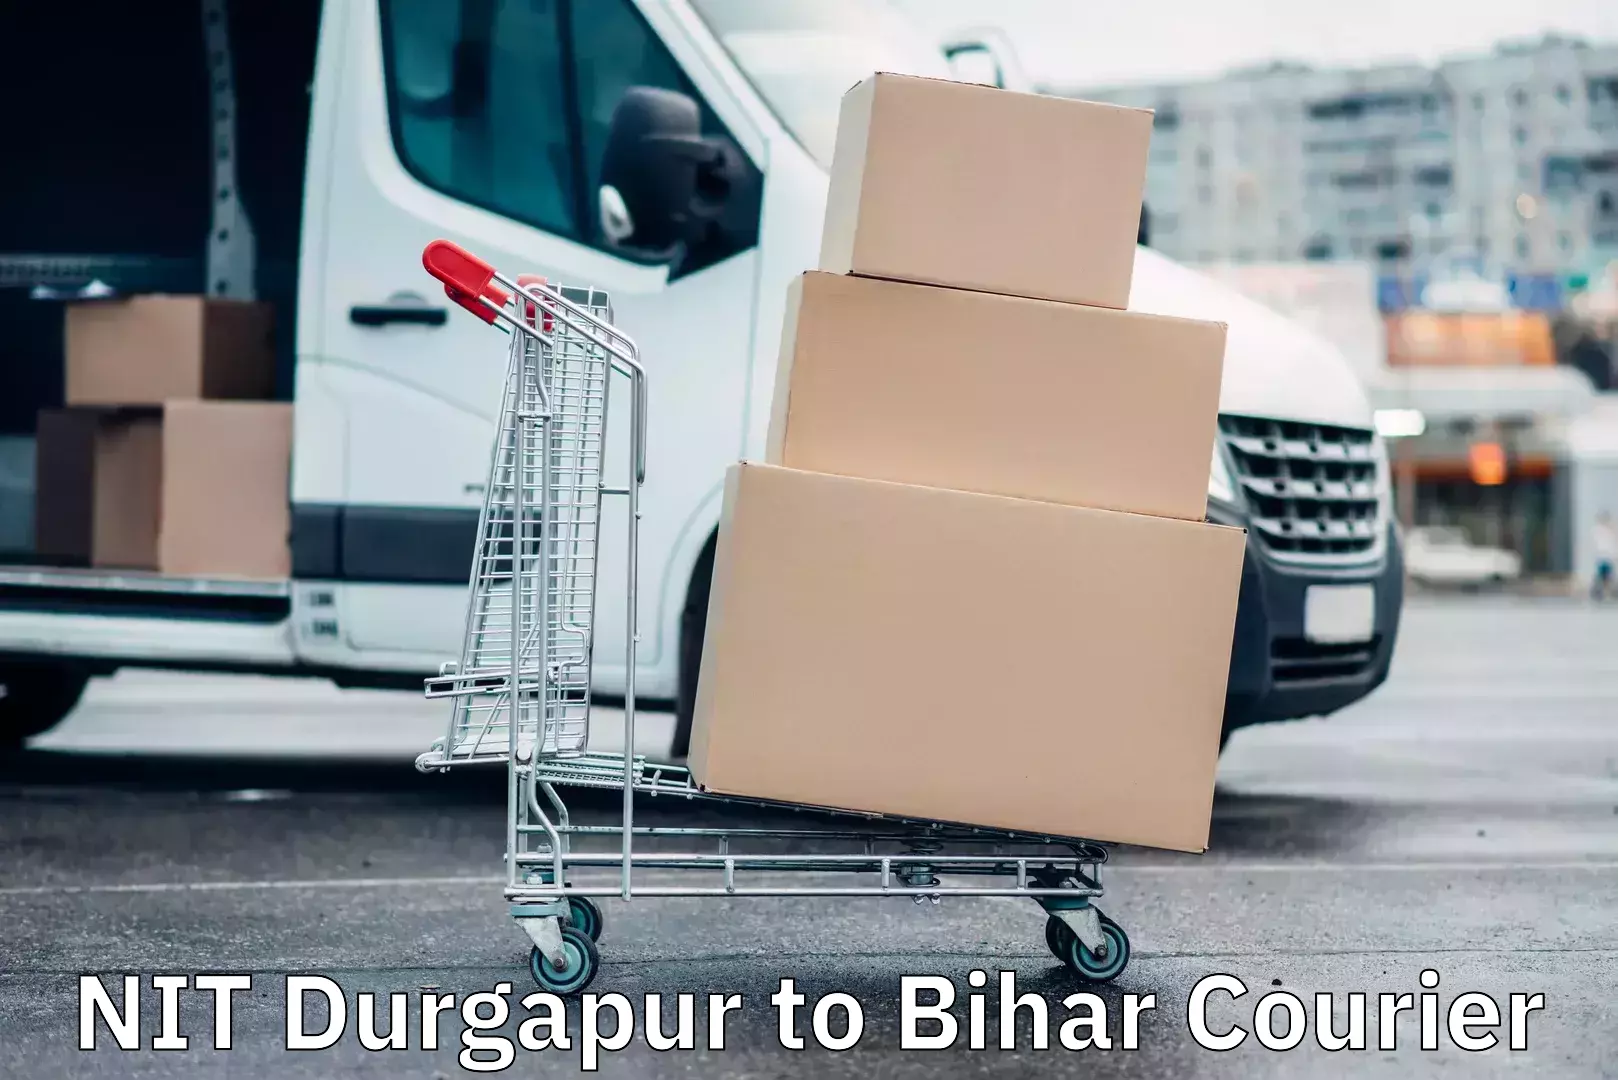 Nationwide parcel services NIT Durgapur to Bihar